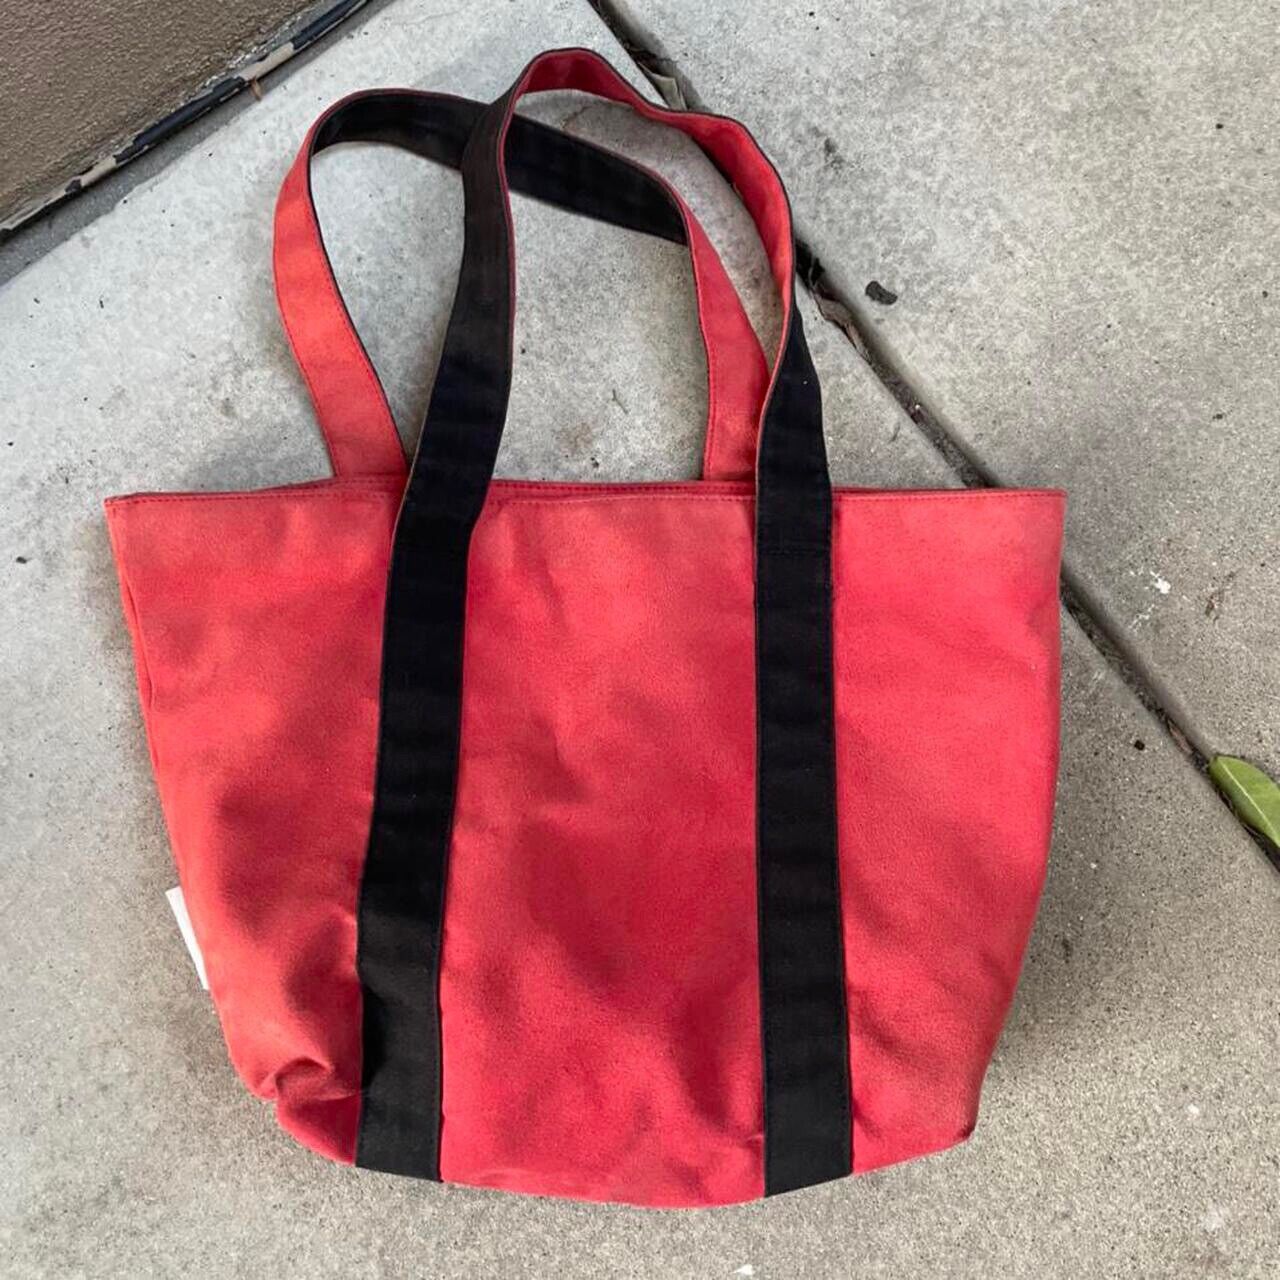 NWT MICHAEL KORS Red & Black Suede Effect Tote Bag | eBay